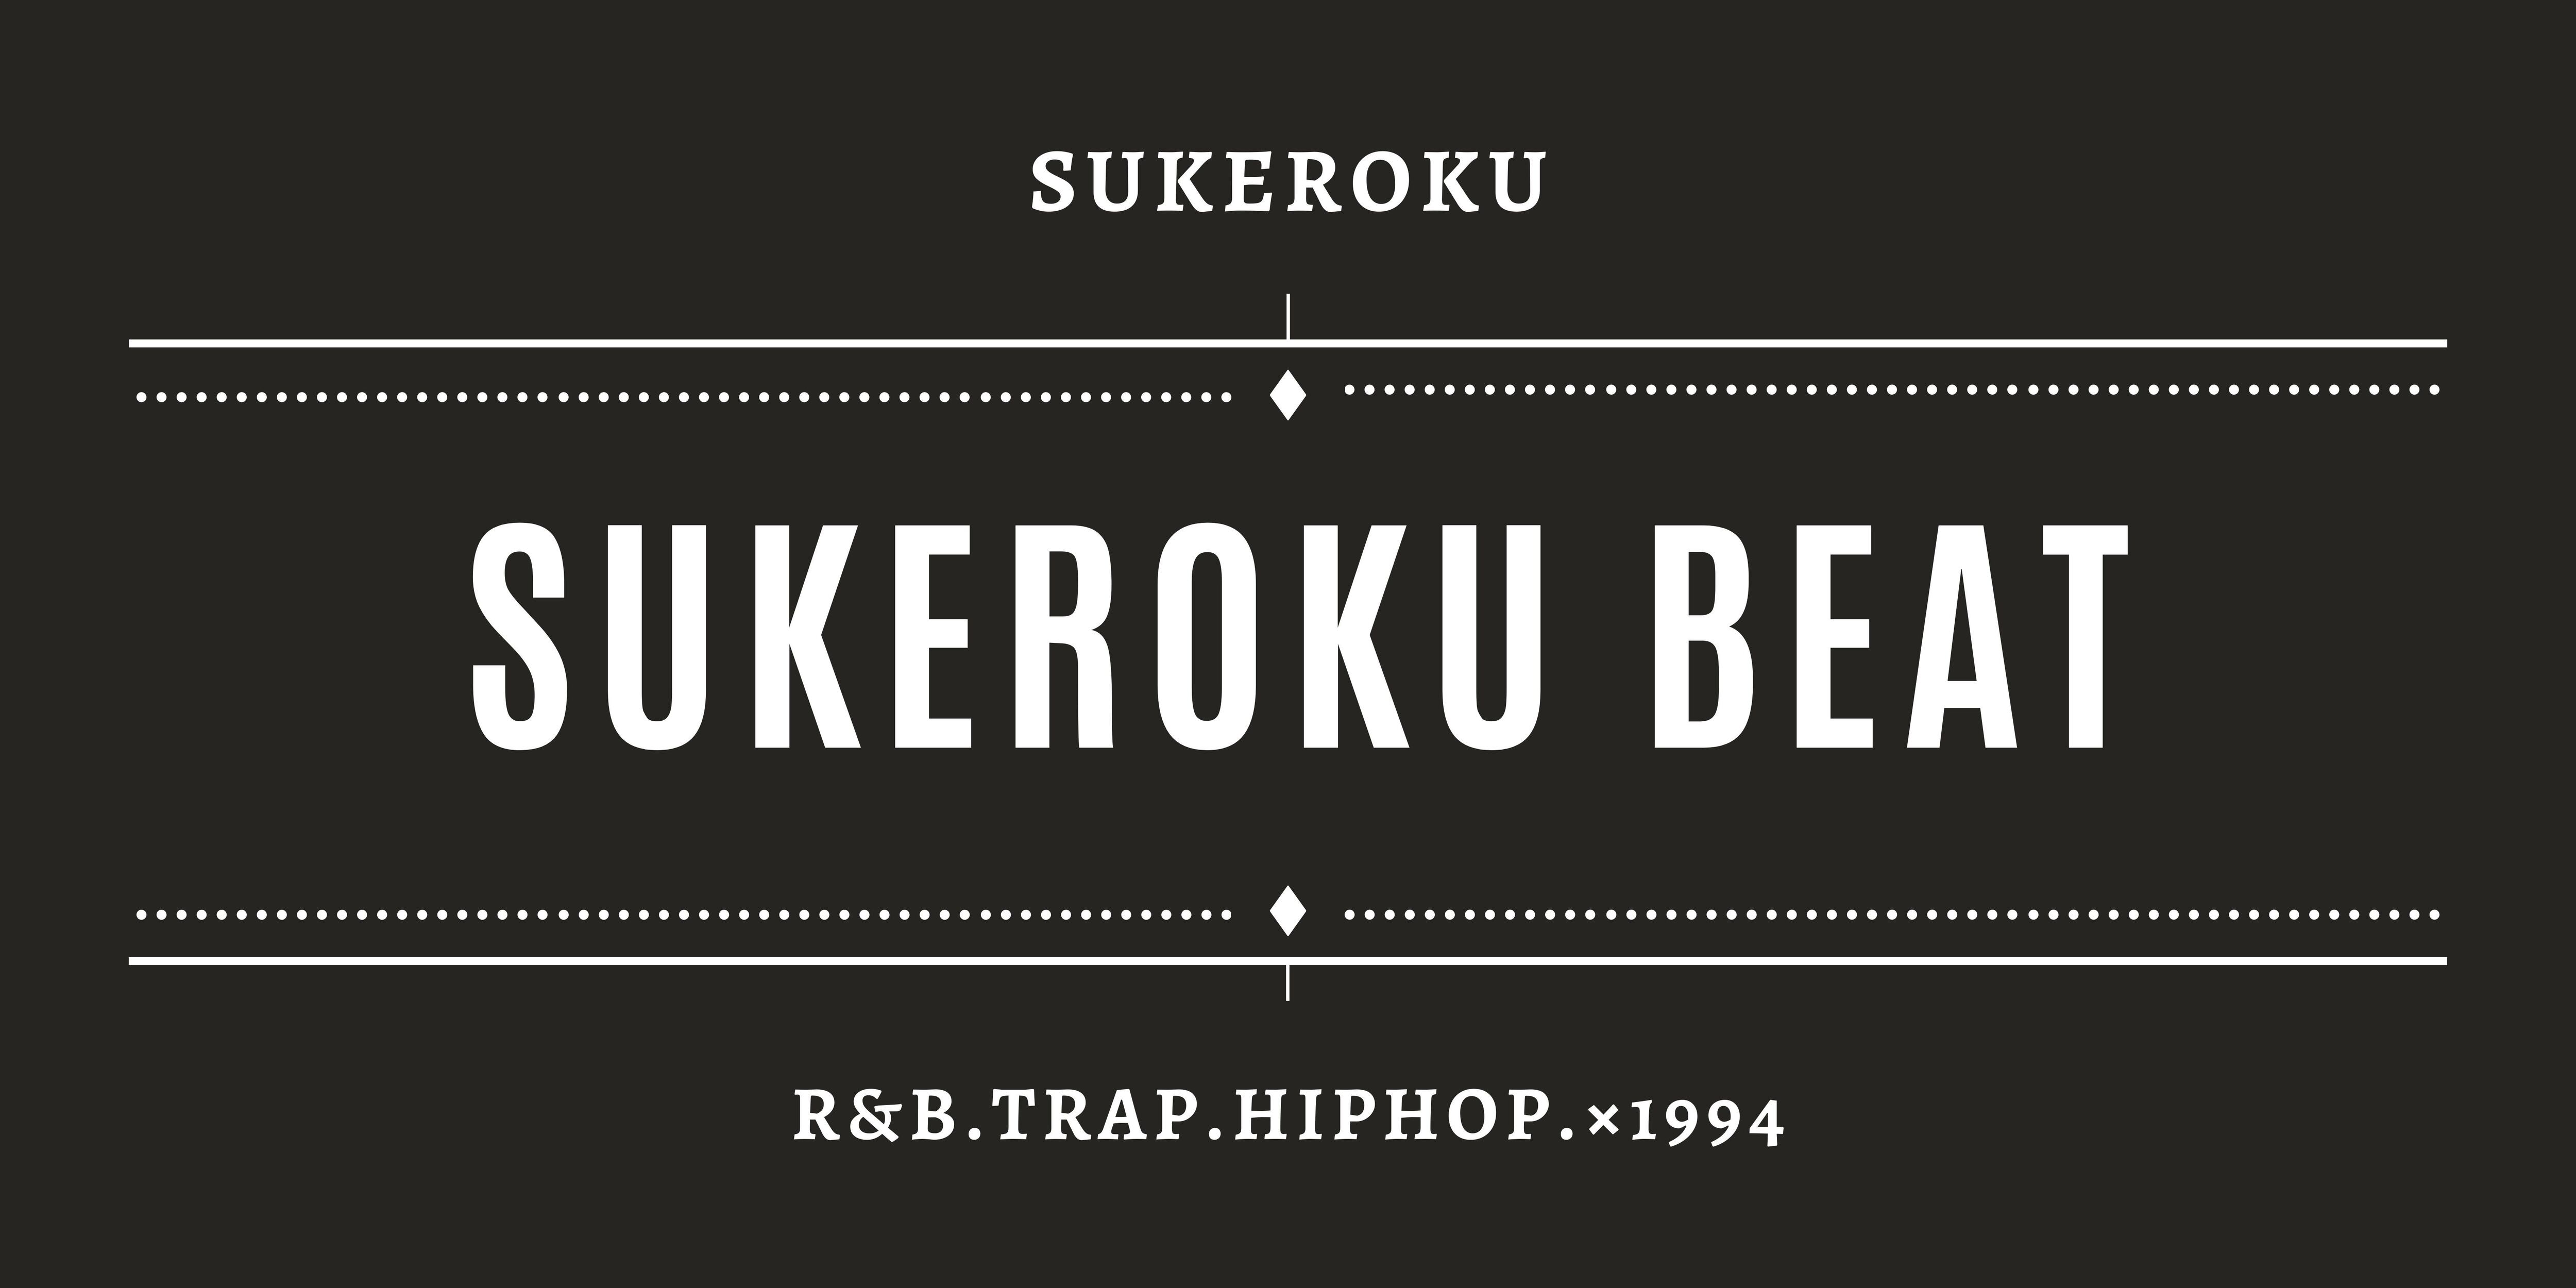 Sukeroku beat 